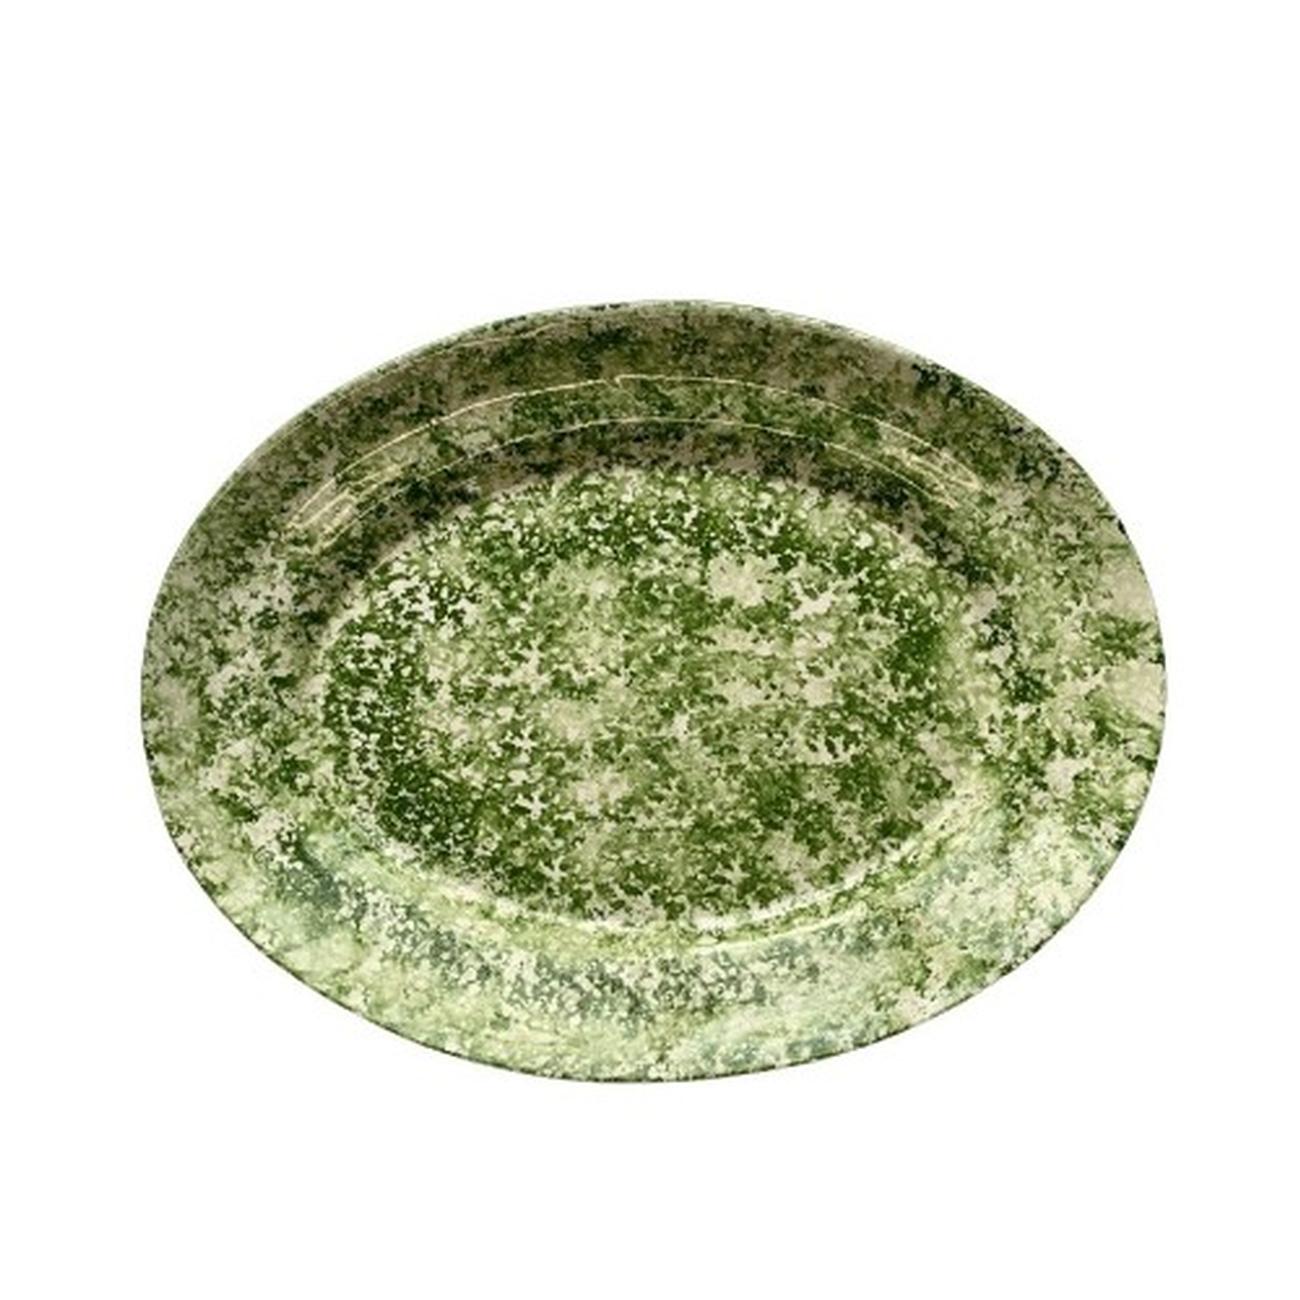 acquerello-green-spongeware-oval-platter - Acquerello Green Spongeware Oval Platter